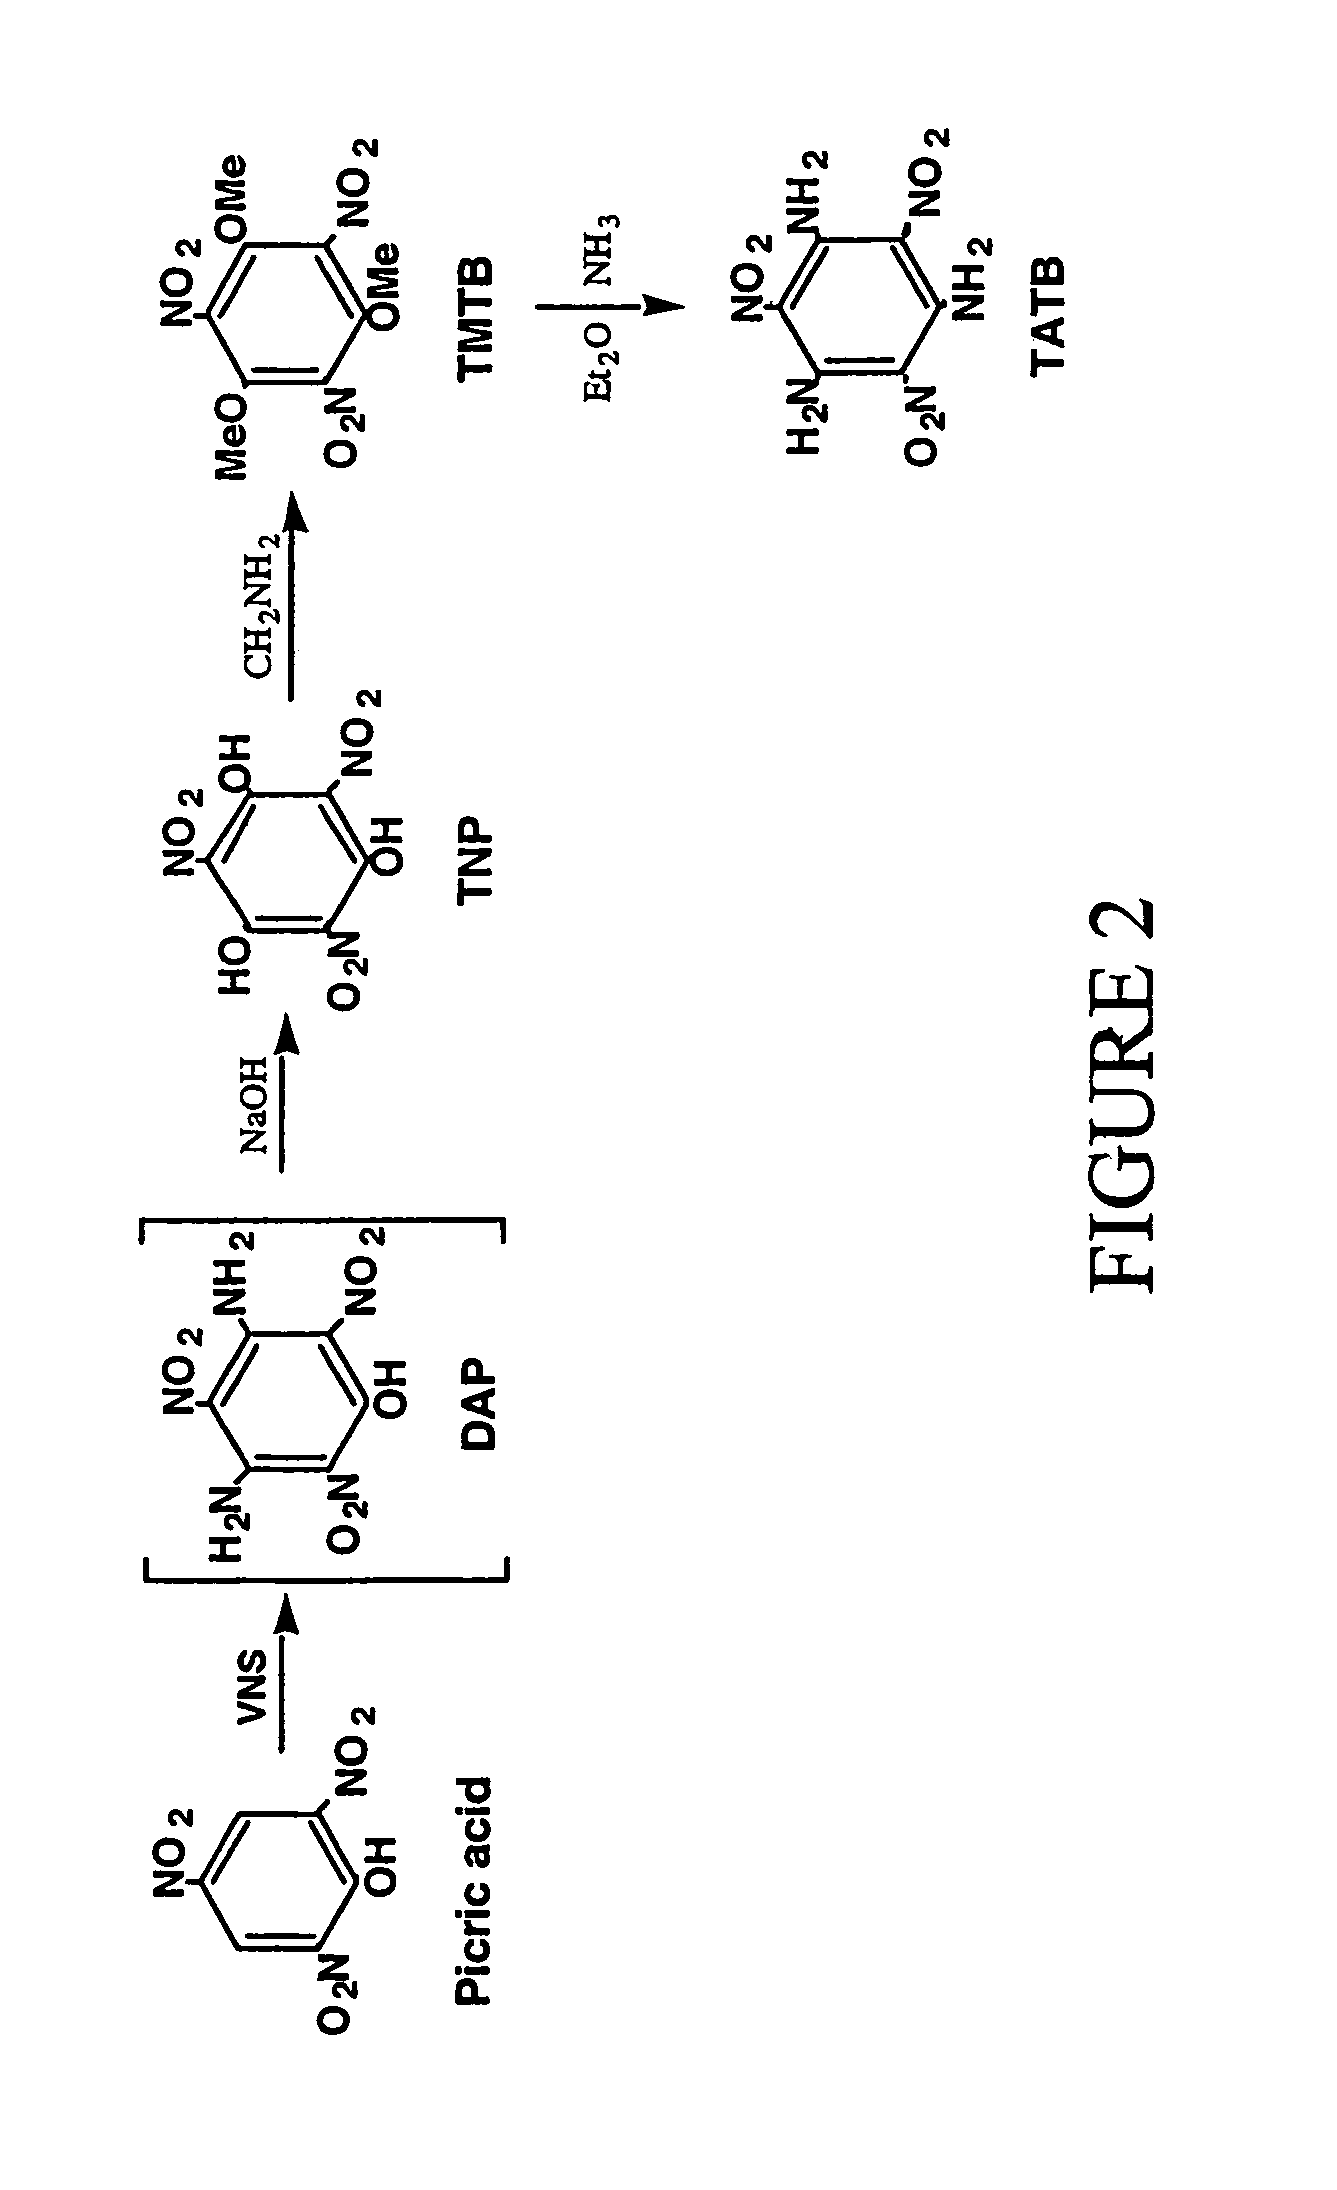 Synthesis of trinitrophloroglucinol and triaminotrinitrobenzene (TATB)